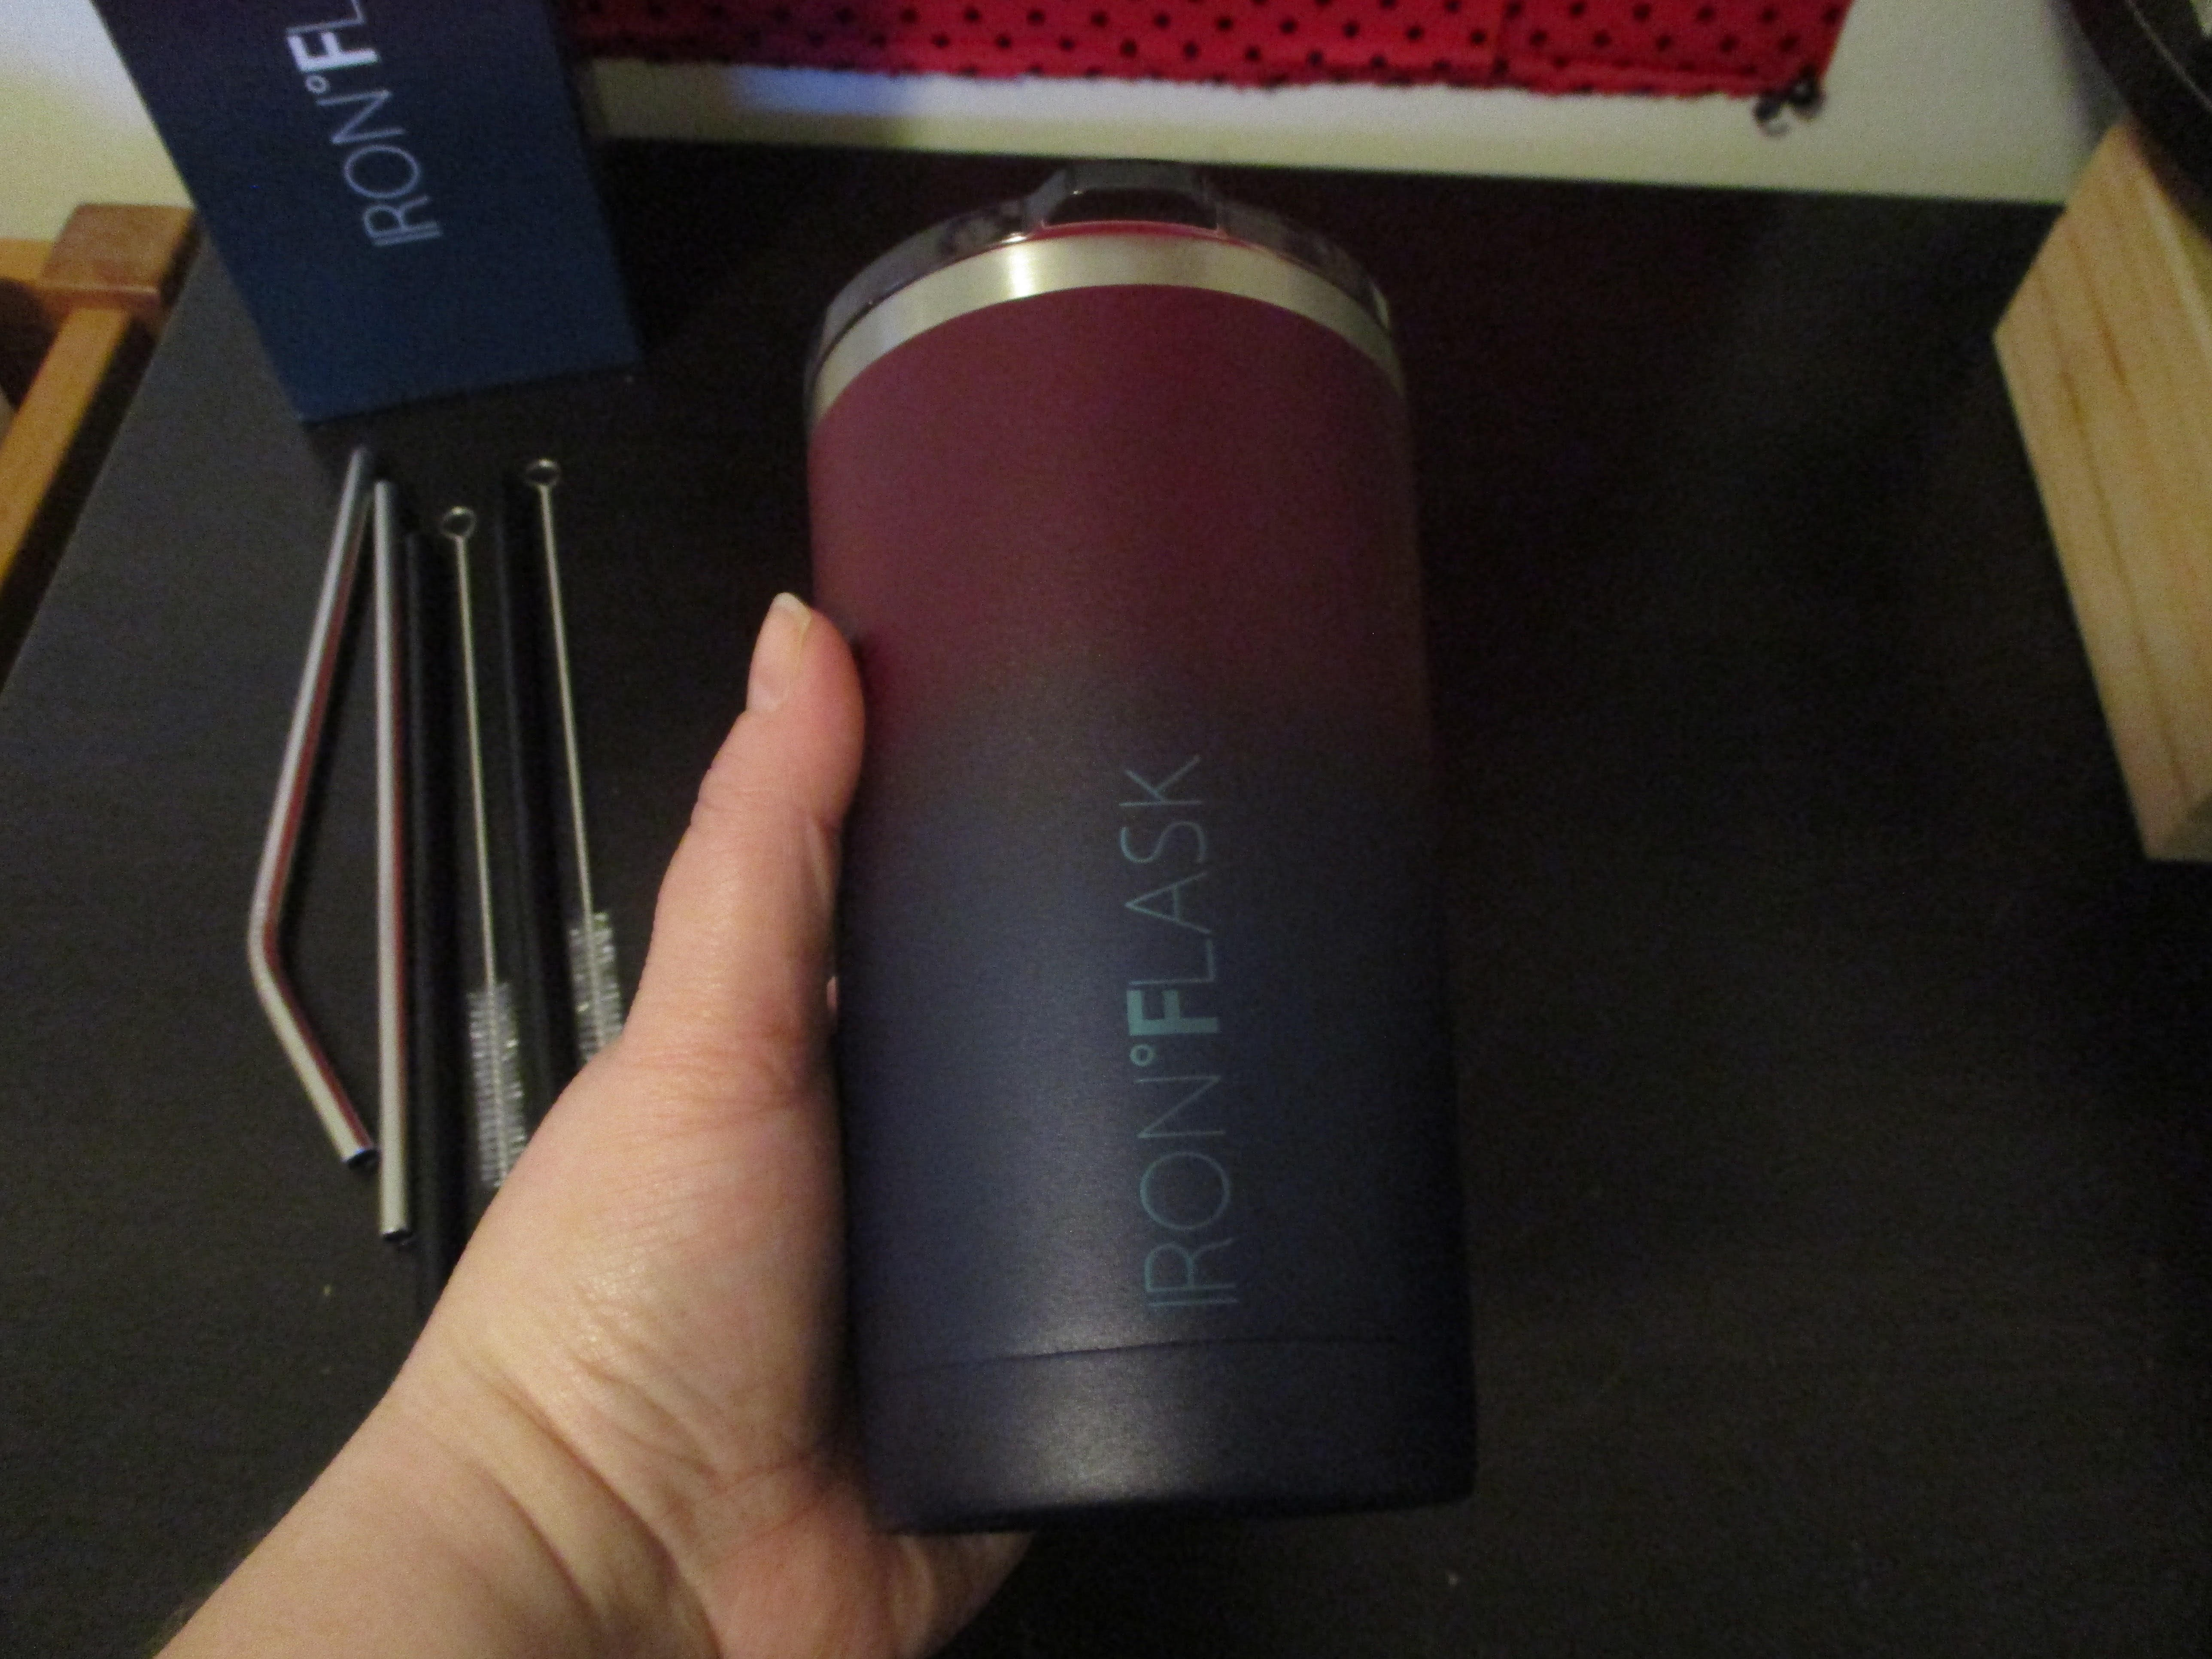 Iron Flask Insulated Coffee Mug with Handle - Dark Rainbow - Shop